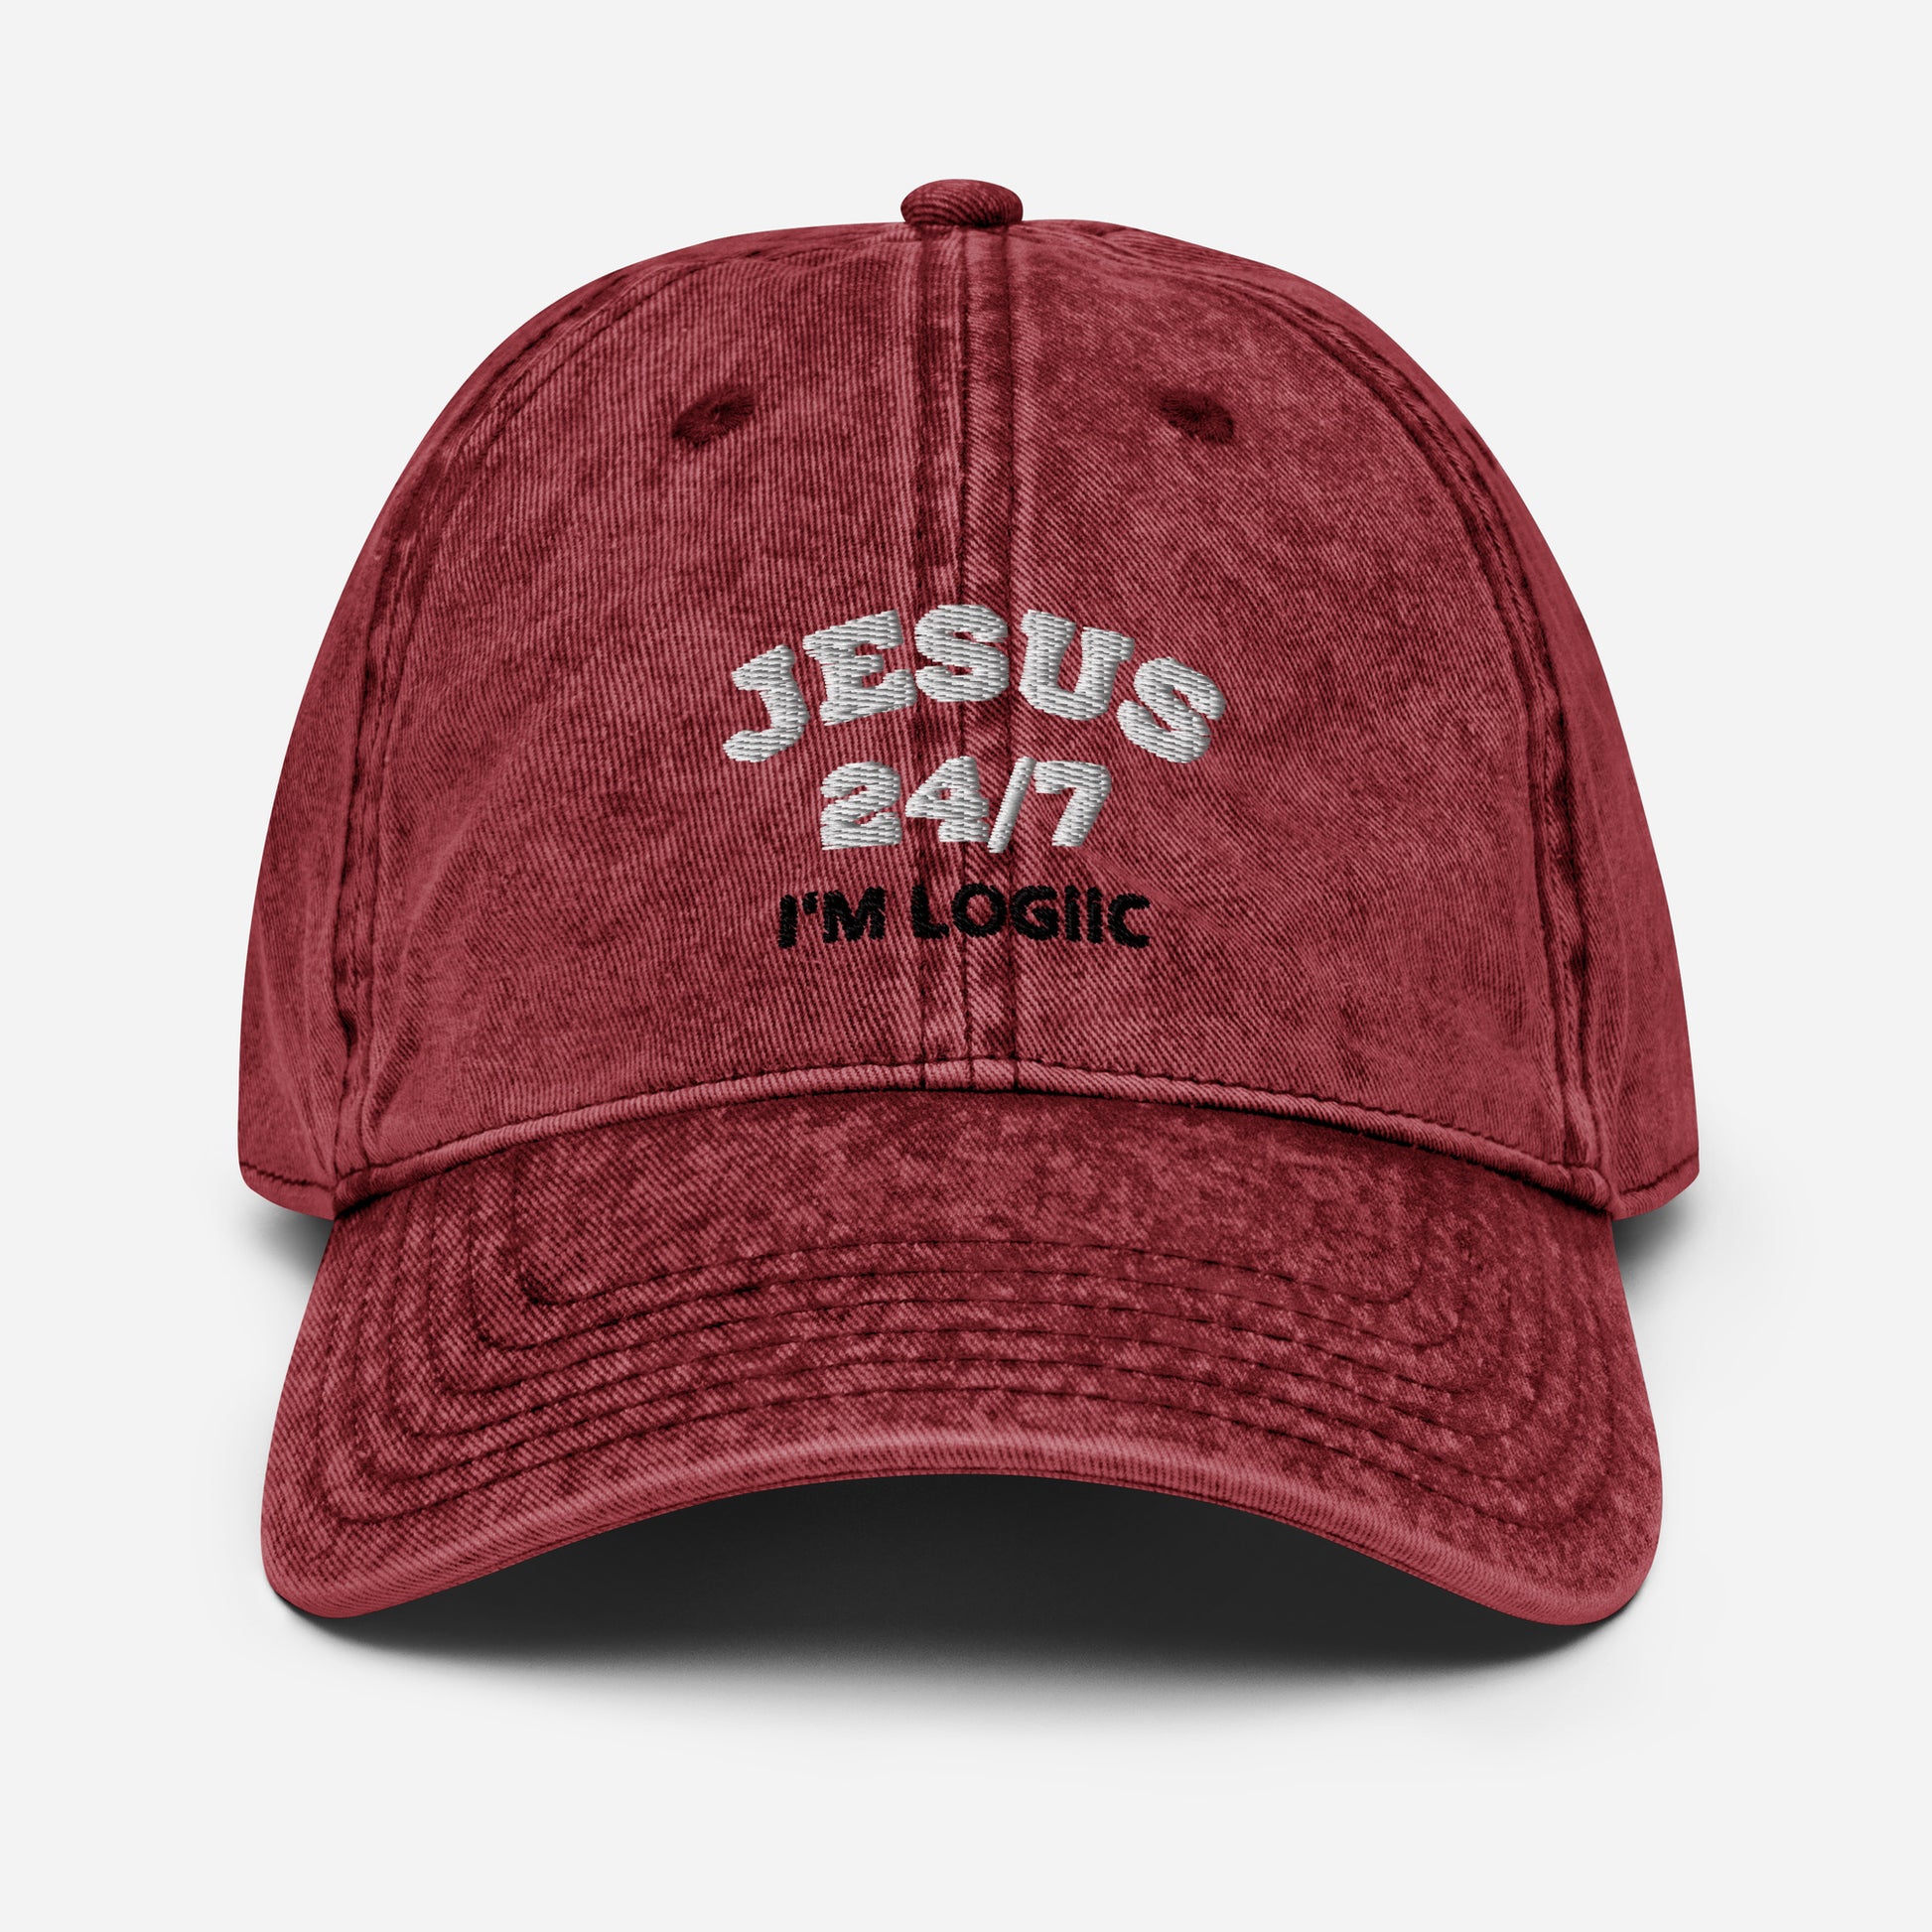 Jesus 24/7 Embroidery Vintage Cotton Twill Cap - Maroon -